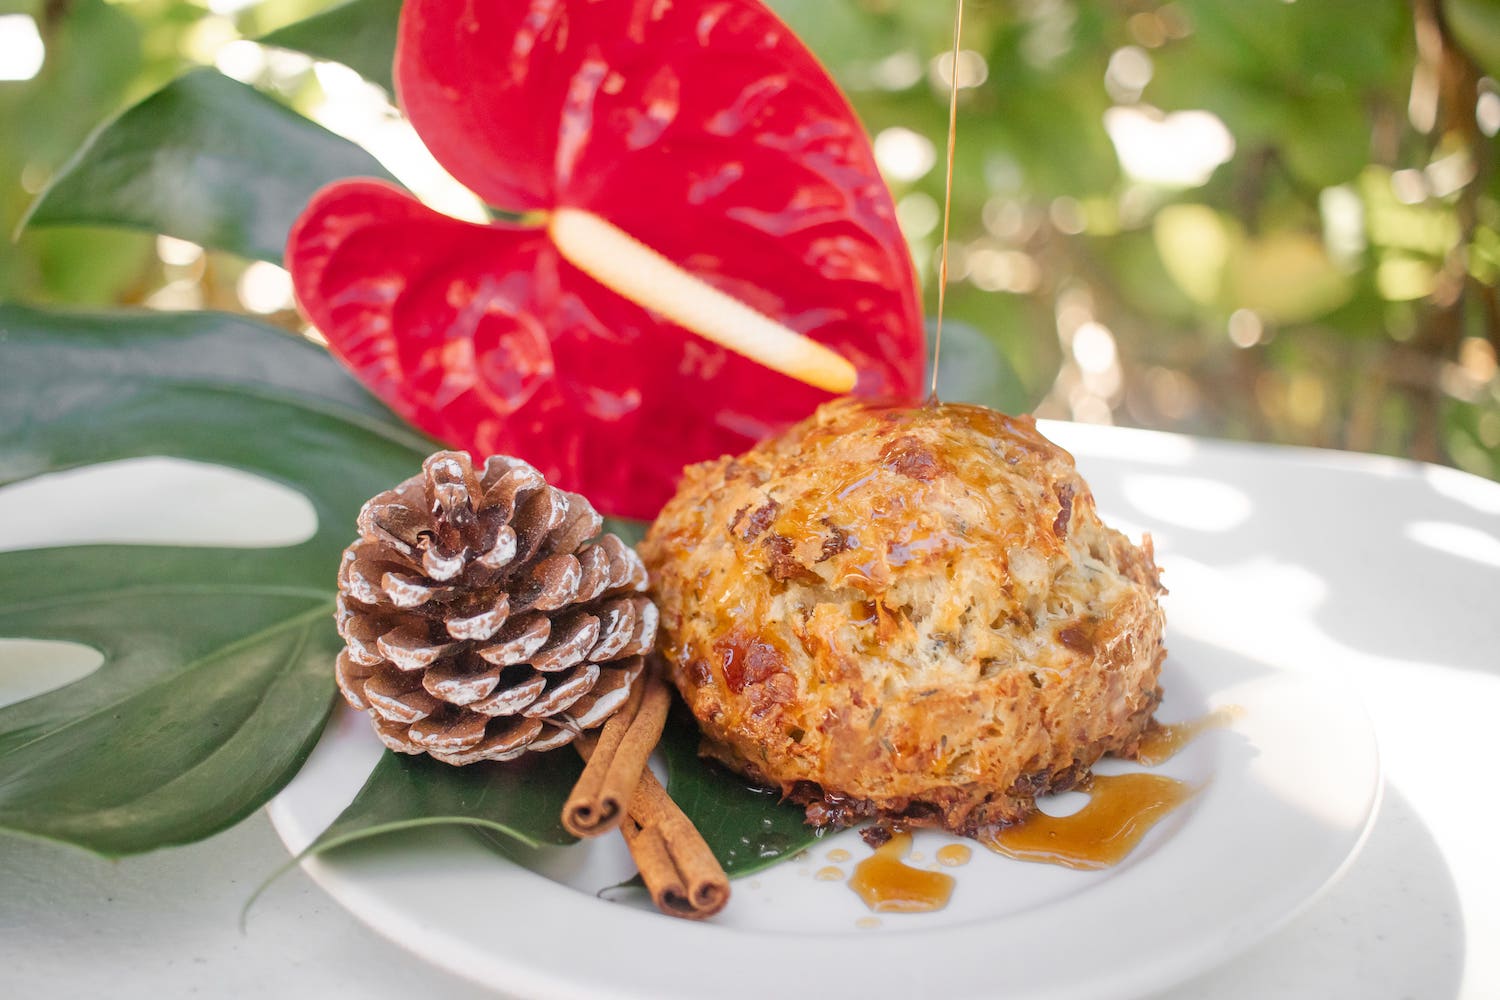 Honolulu Coffee seasonal menu item: Spiced Maple Bacon Scone